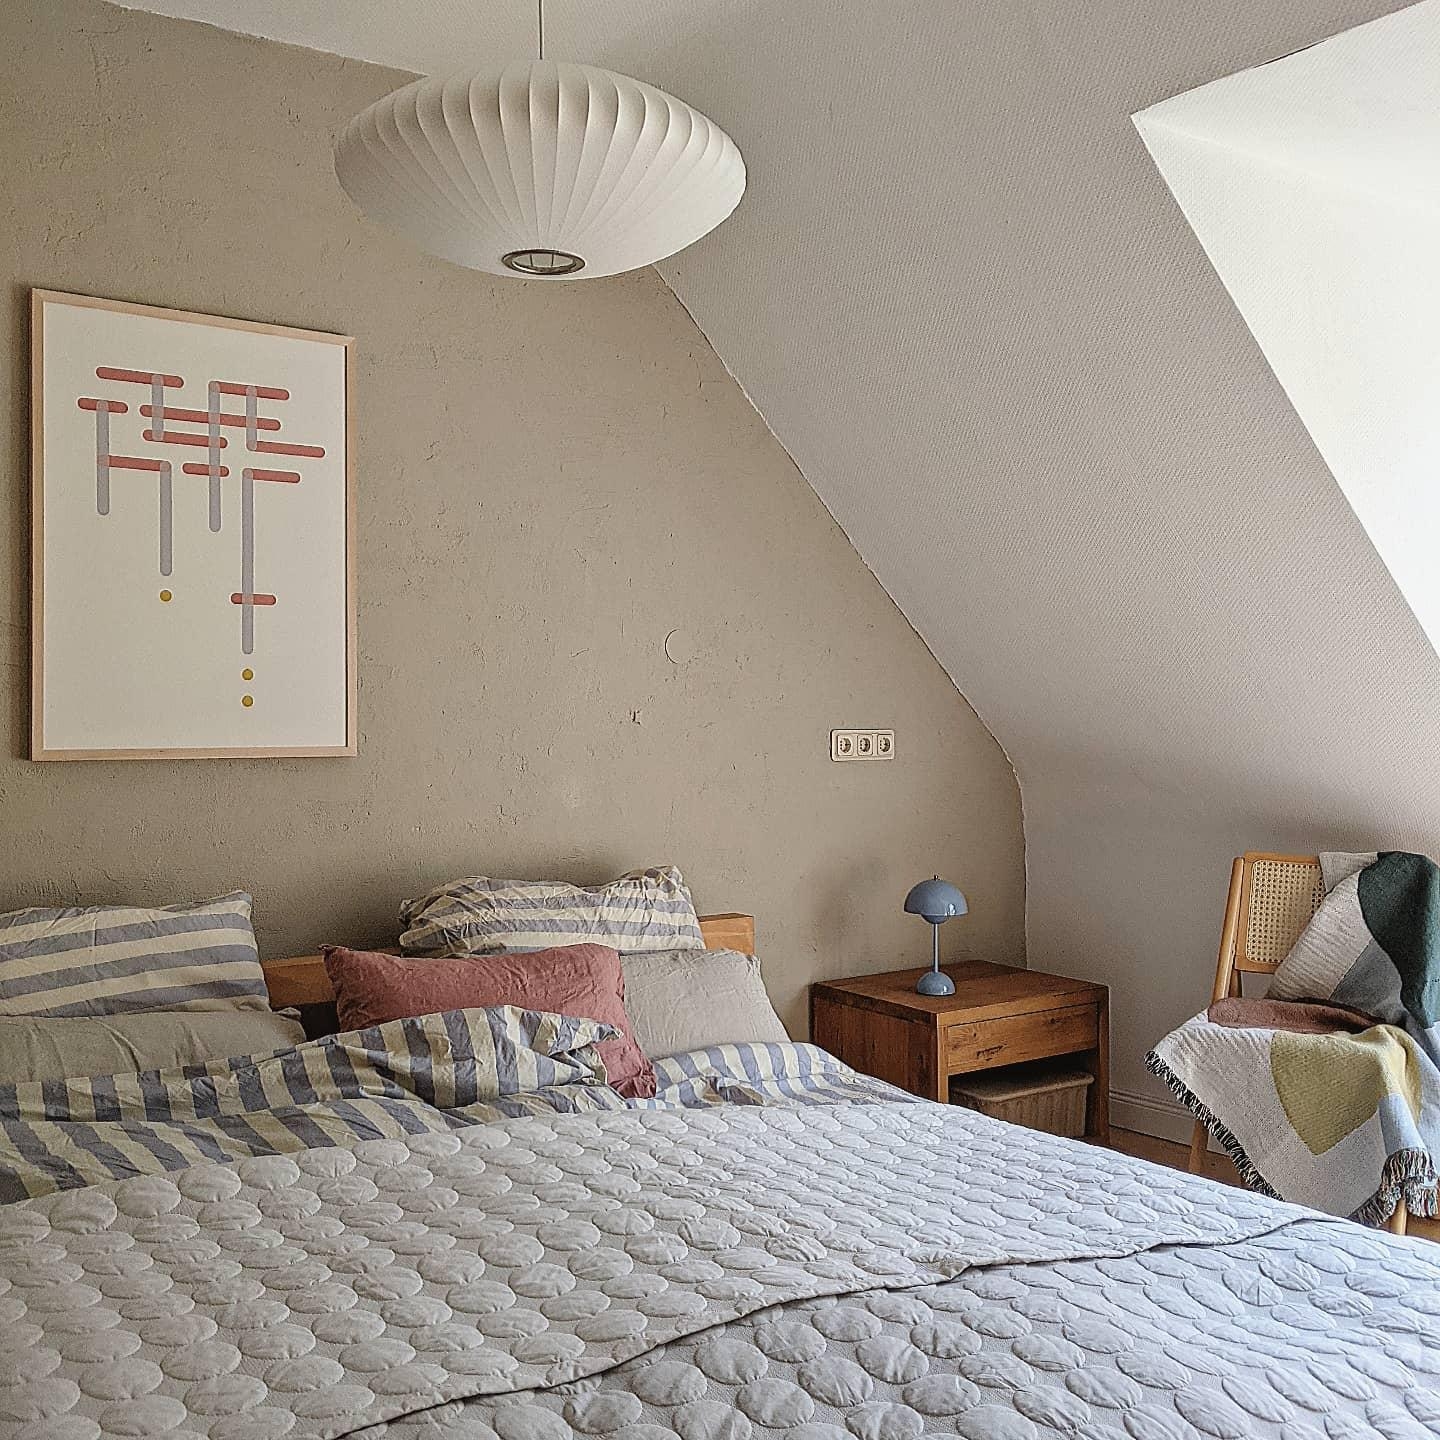 #schlafzimmer#bedroom#lampen#interior#scandinavisn#altbau#couchstyle#home#living#homestory